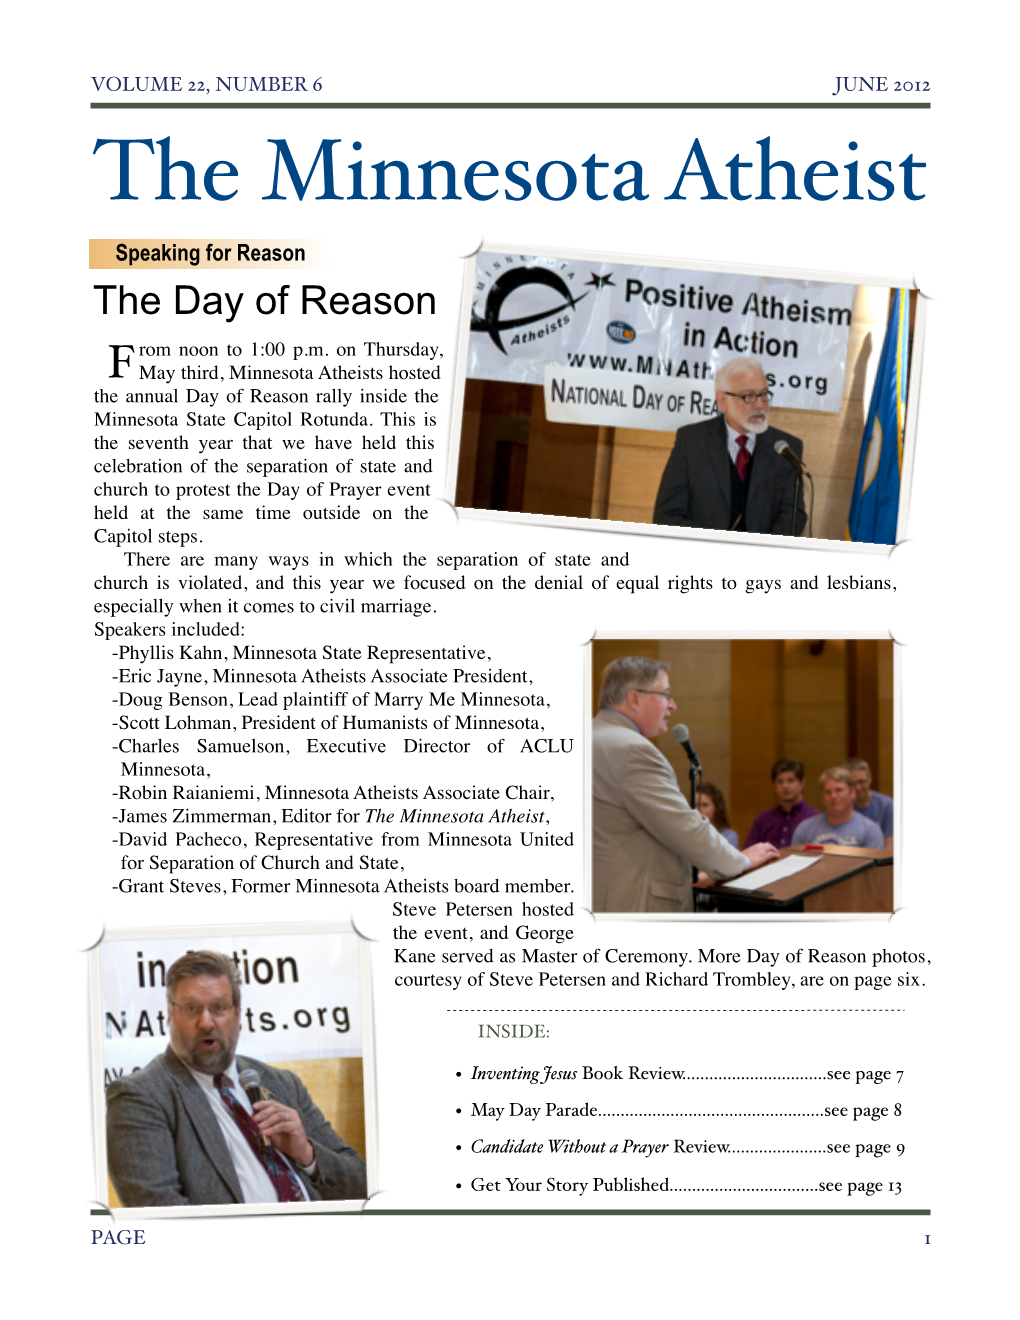 Mnatheists.Org Published by Minnesota Atheists, Assoc